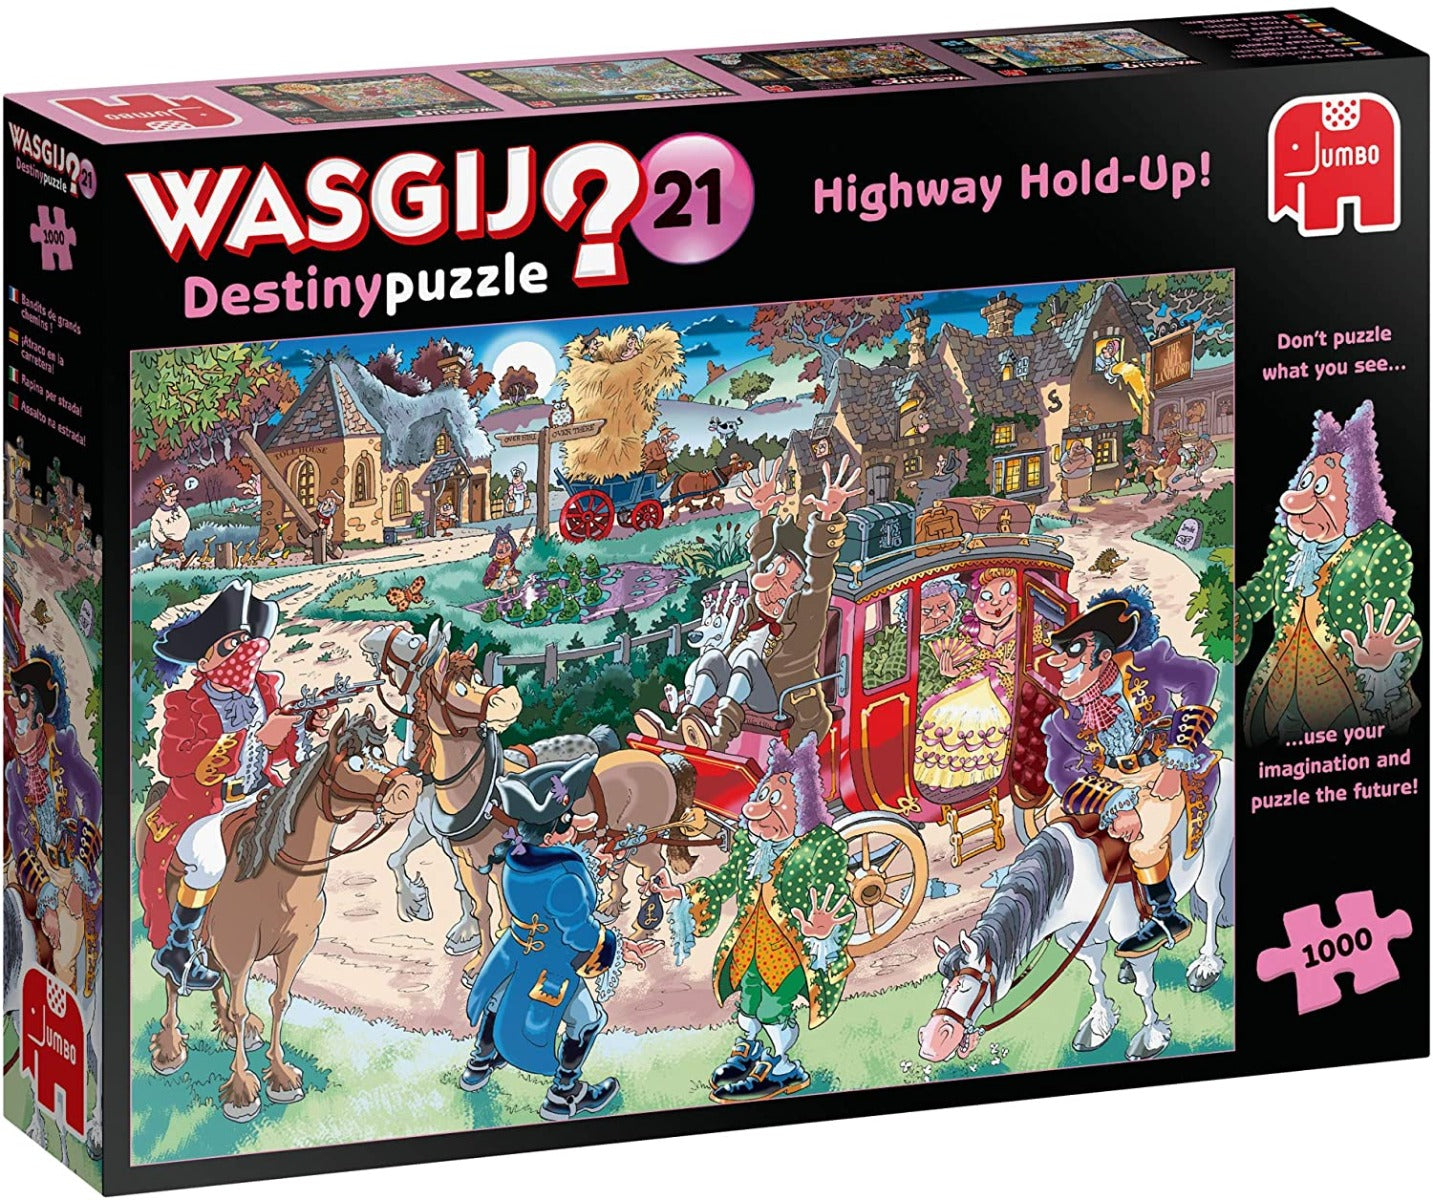 Wasgij Destiny 21 - Highway Holdup - 1000 Piece Jigsaw Puzzle